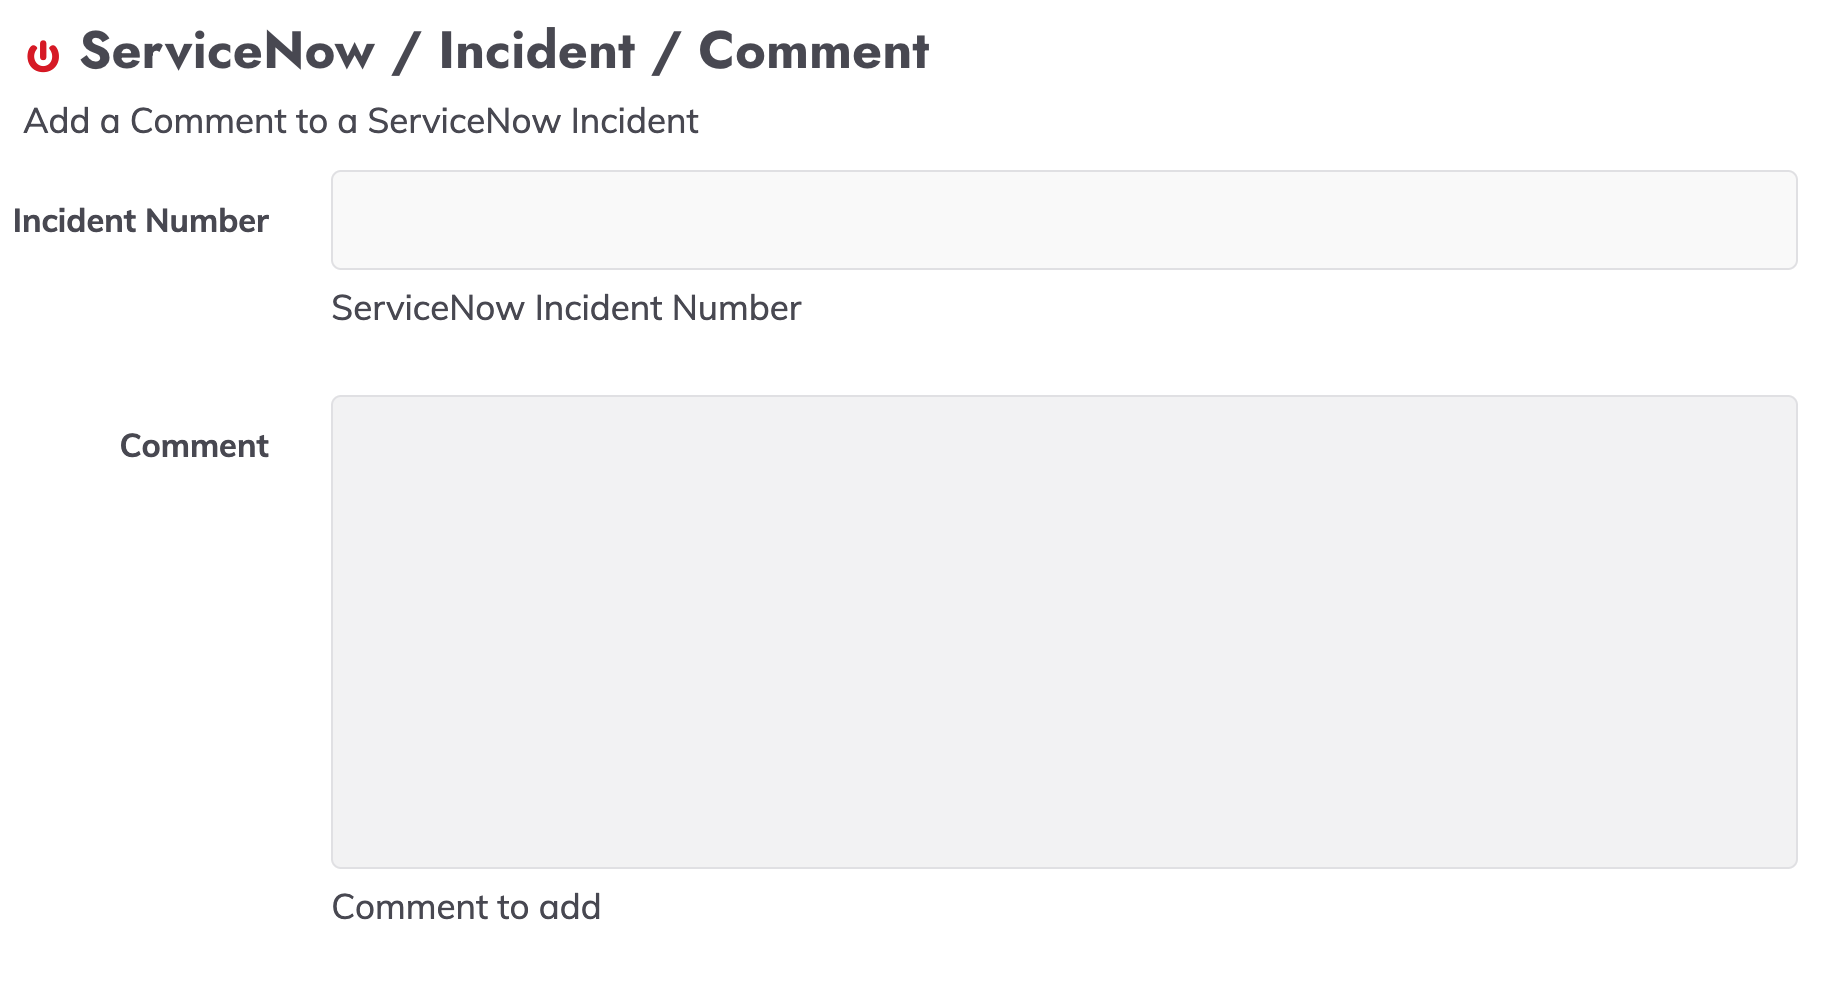 ServiceNow / Incident / Comment